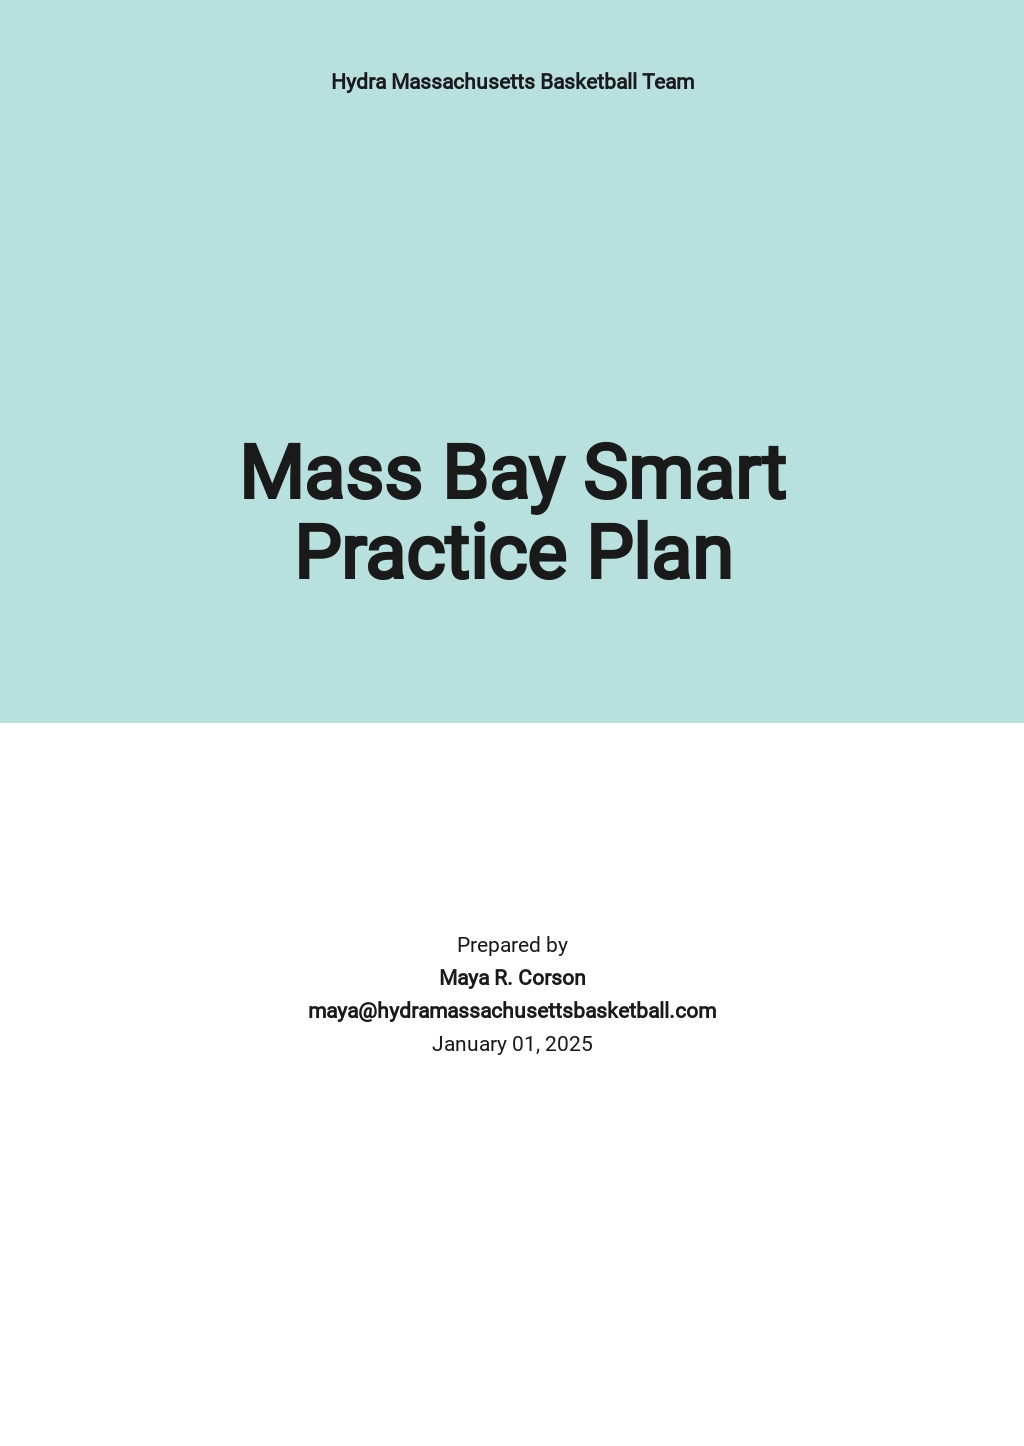 Free Mass Bay Smart Practice Plan Template